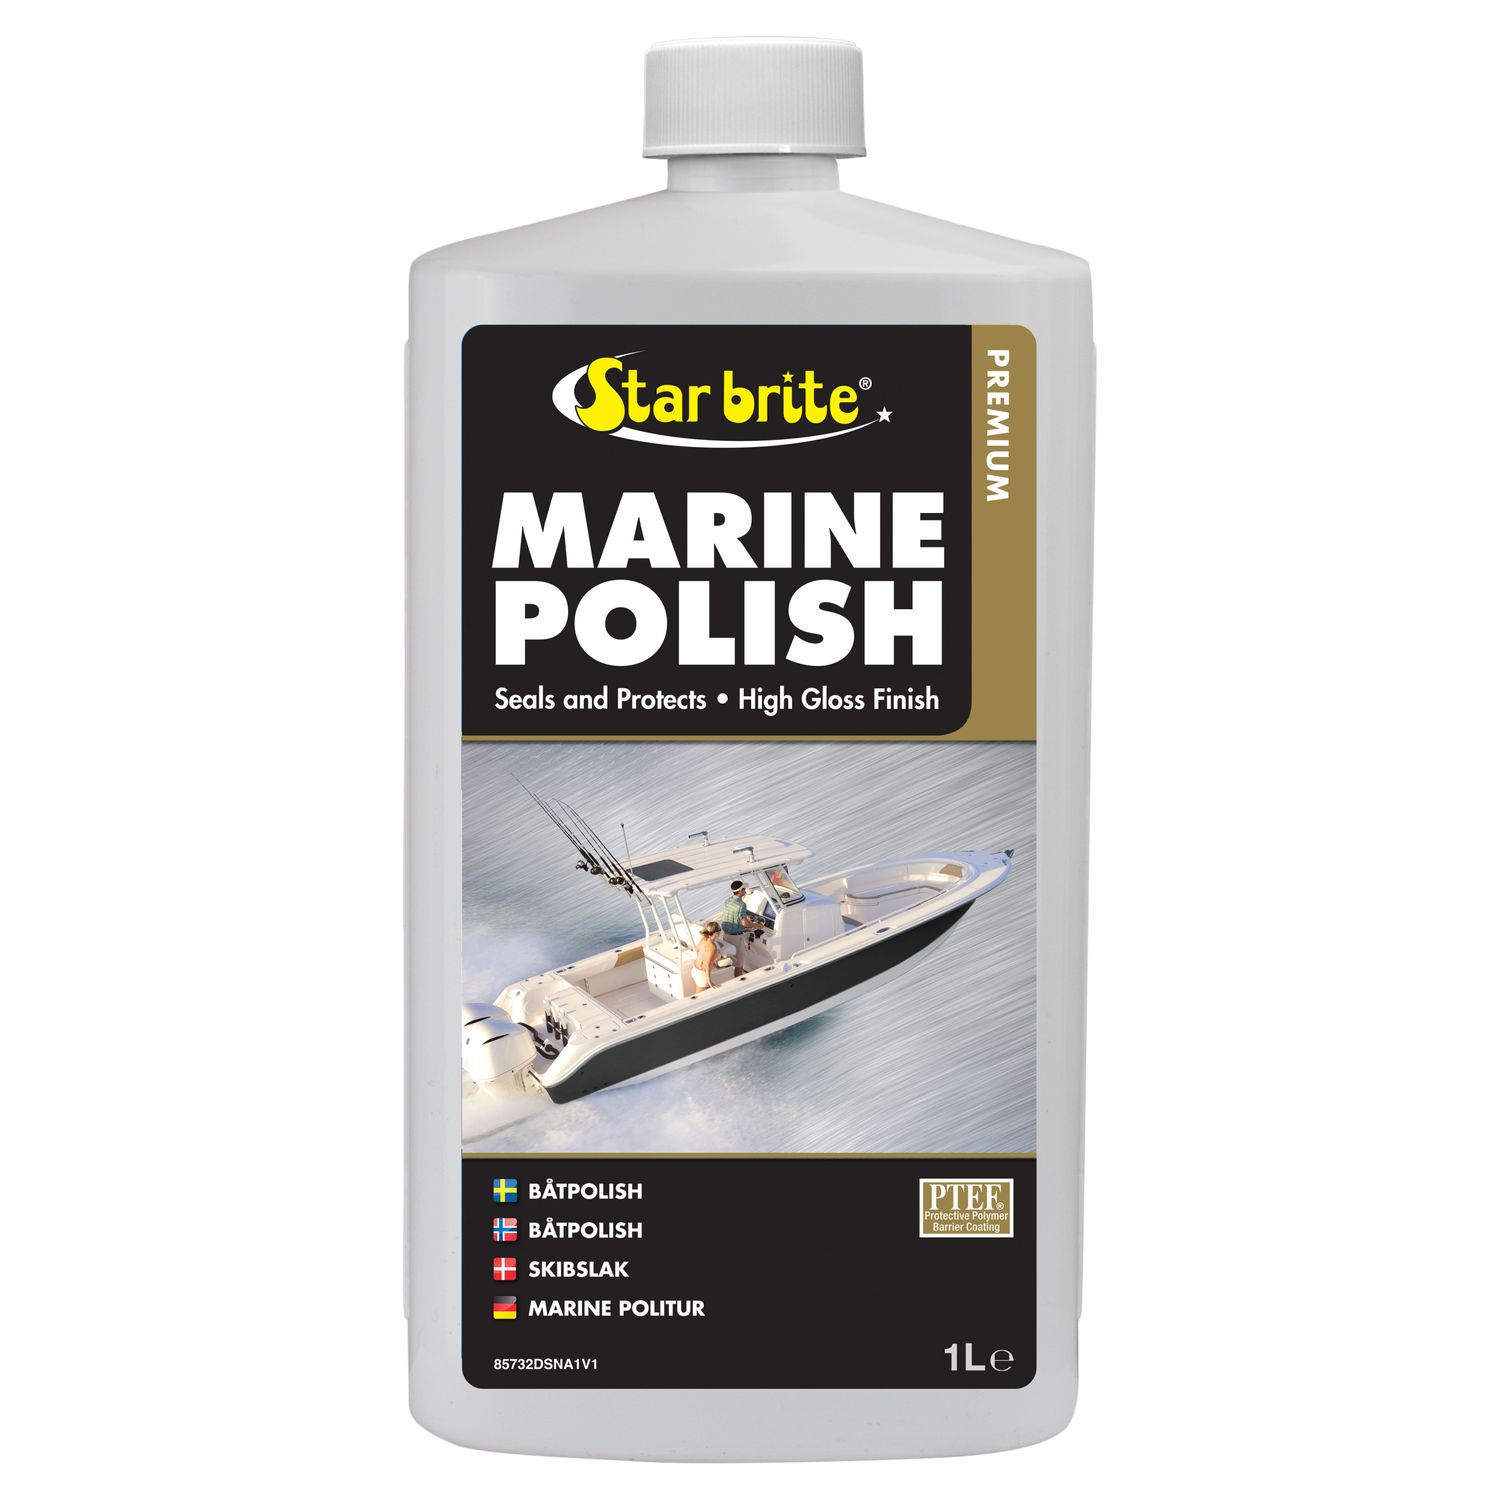 Star brite Premium Marine Polish med PTEF